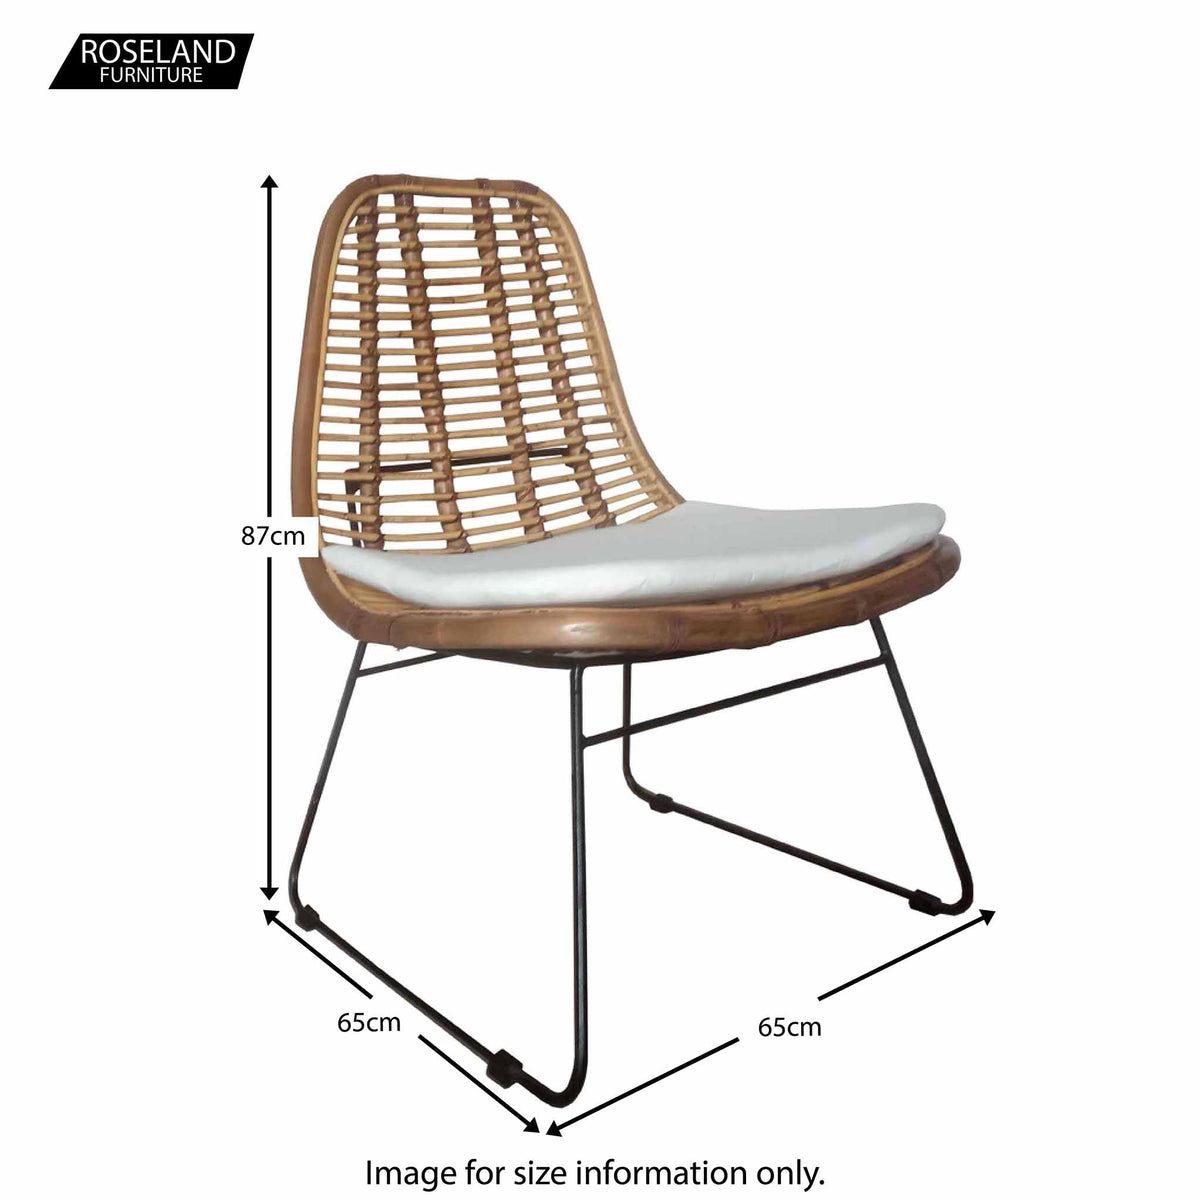 Miri Rattan Chair - Size Guide